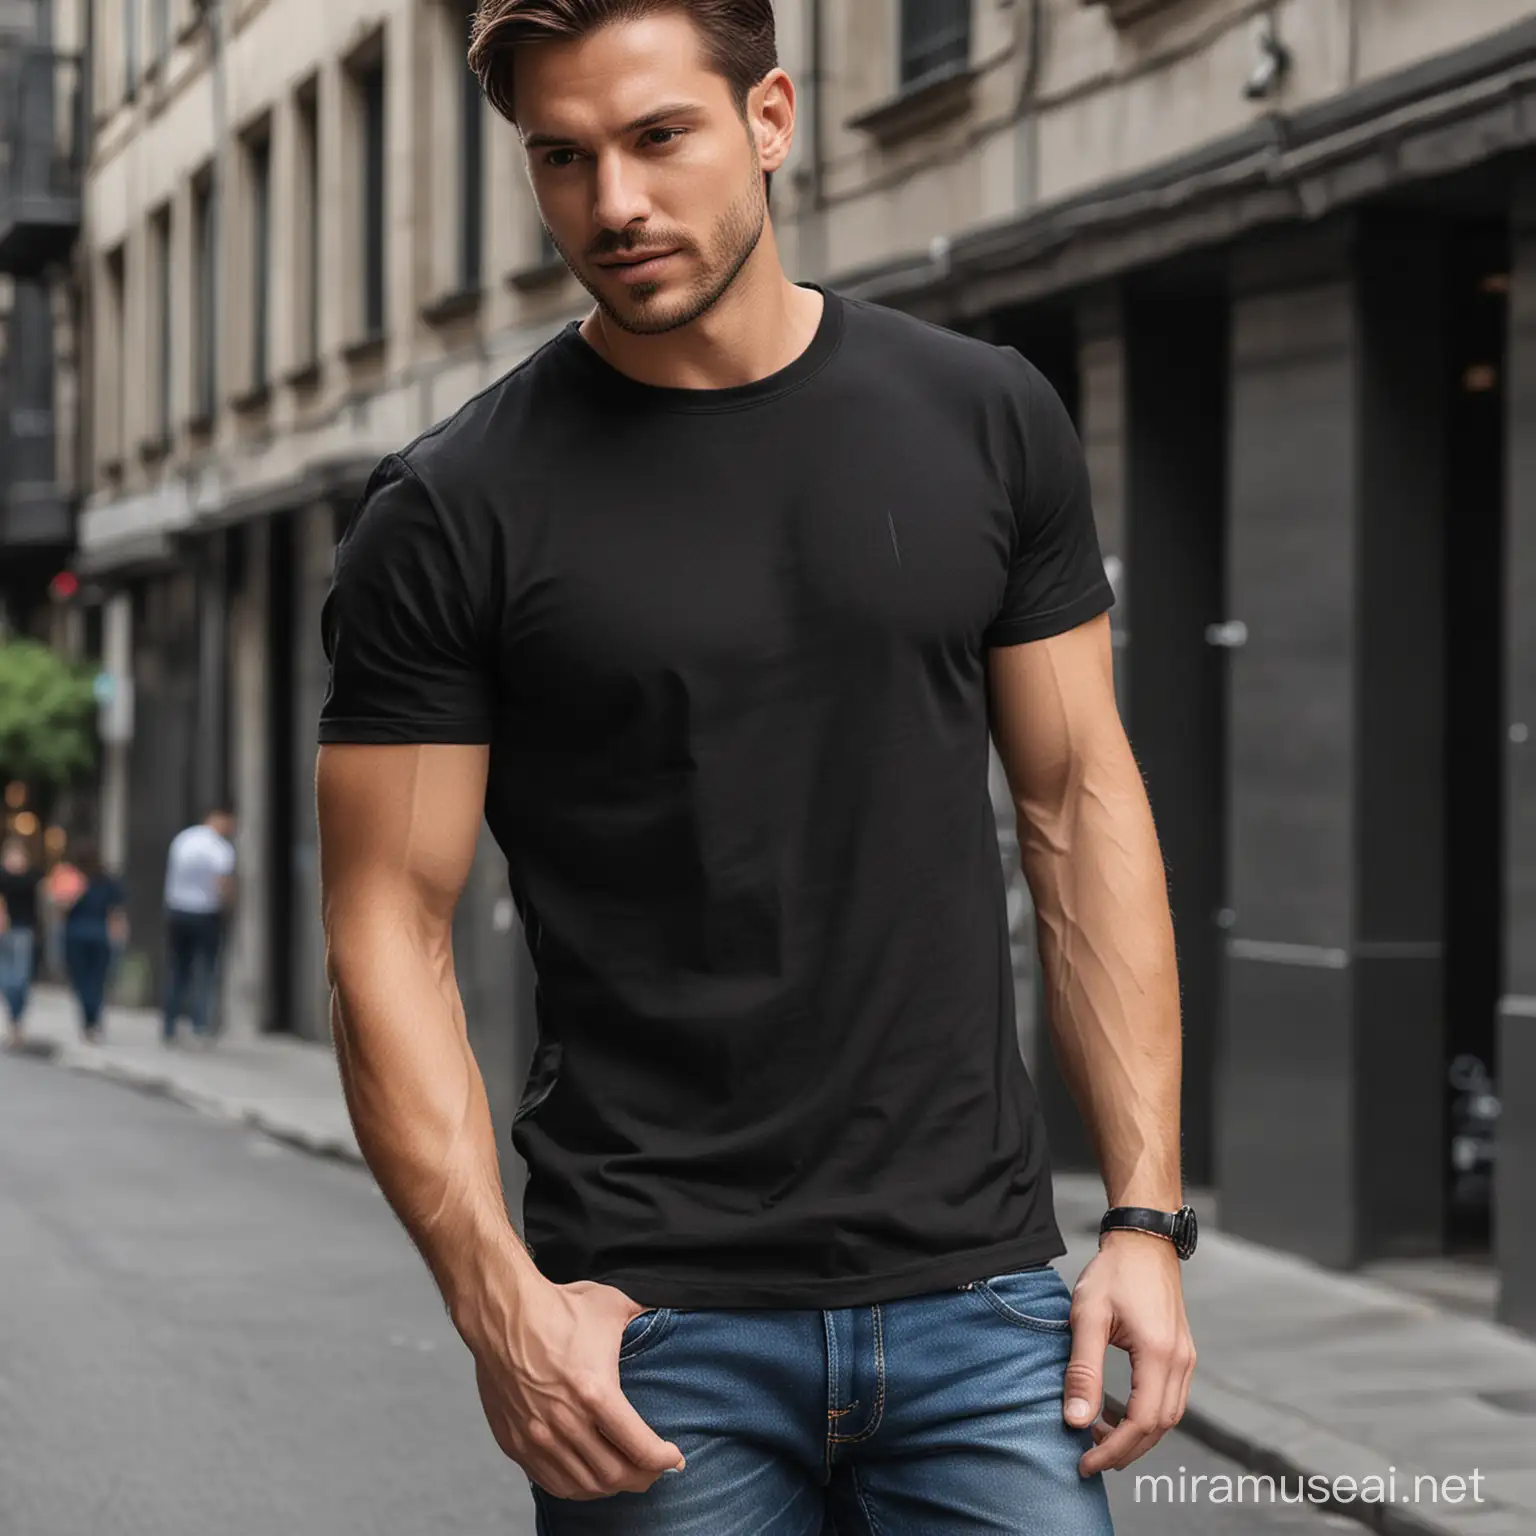 Men Wearing Casual Black TShirt and Jeans Exploring Urban Setting